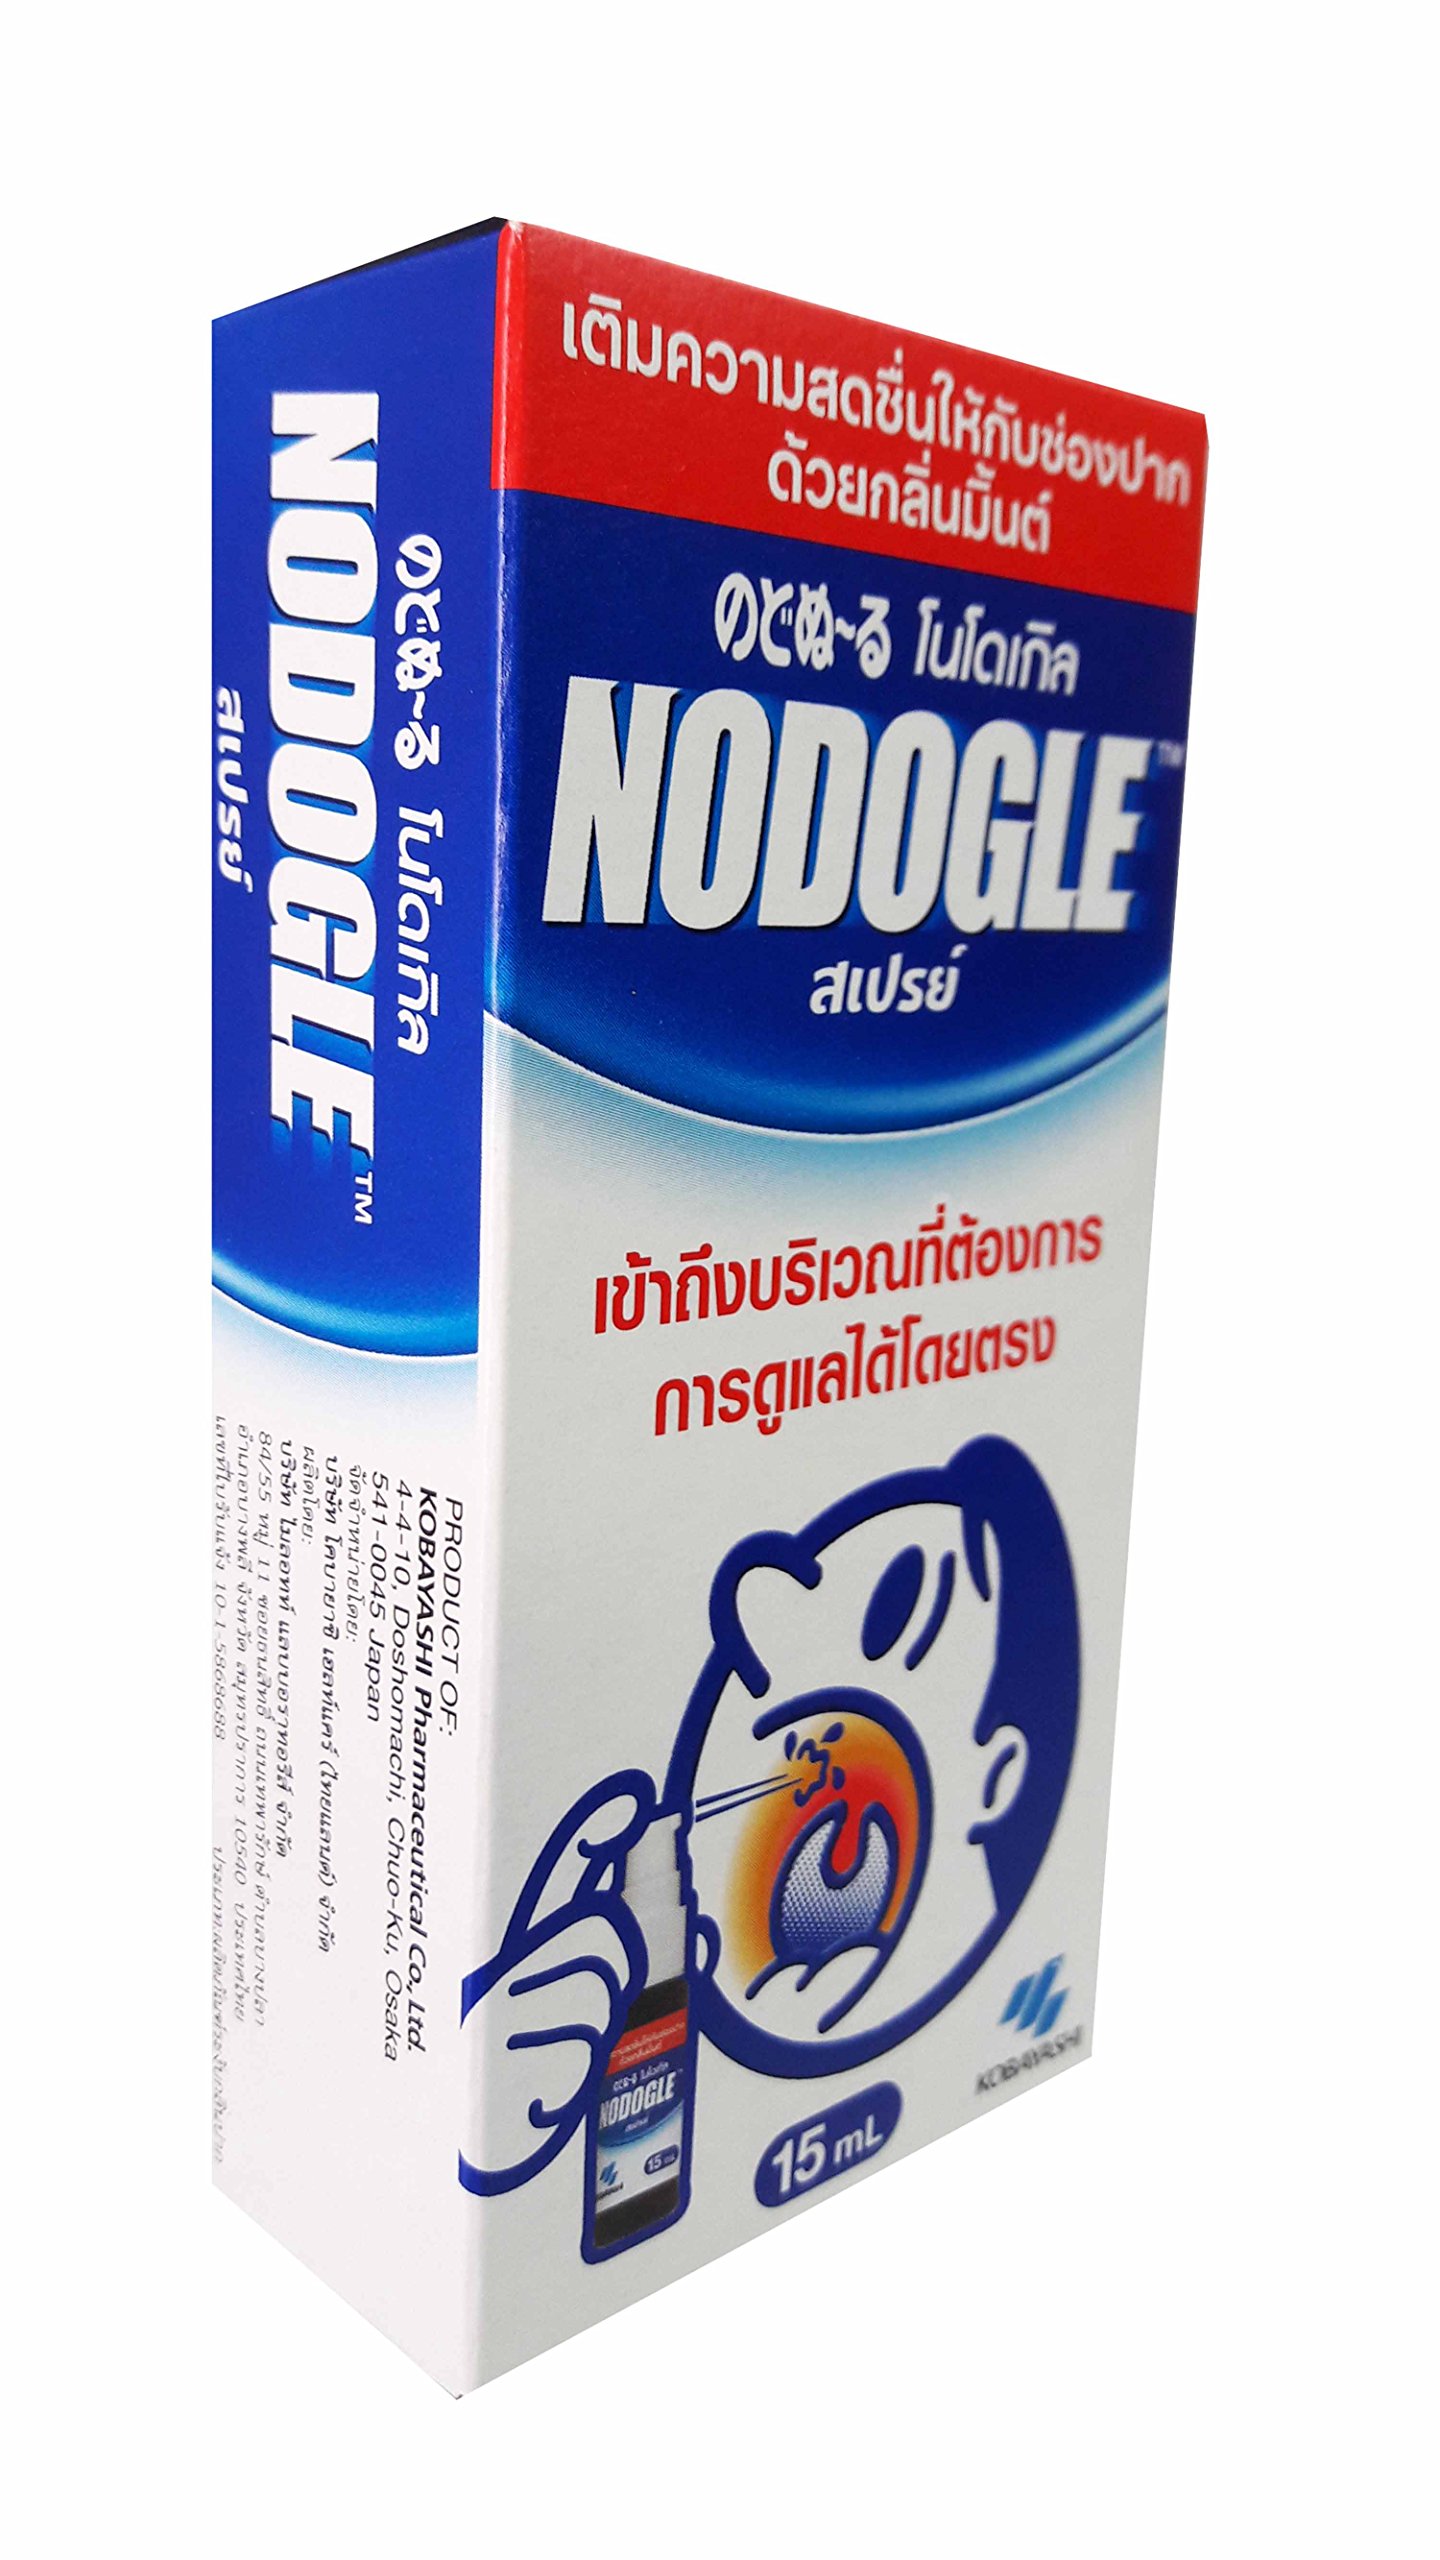 3 Packs of NODOGLE Mouth Spray for Moisturizing and Refreshing. (15 ml/ Pack)